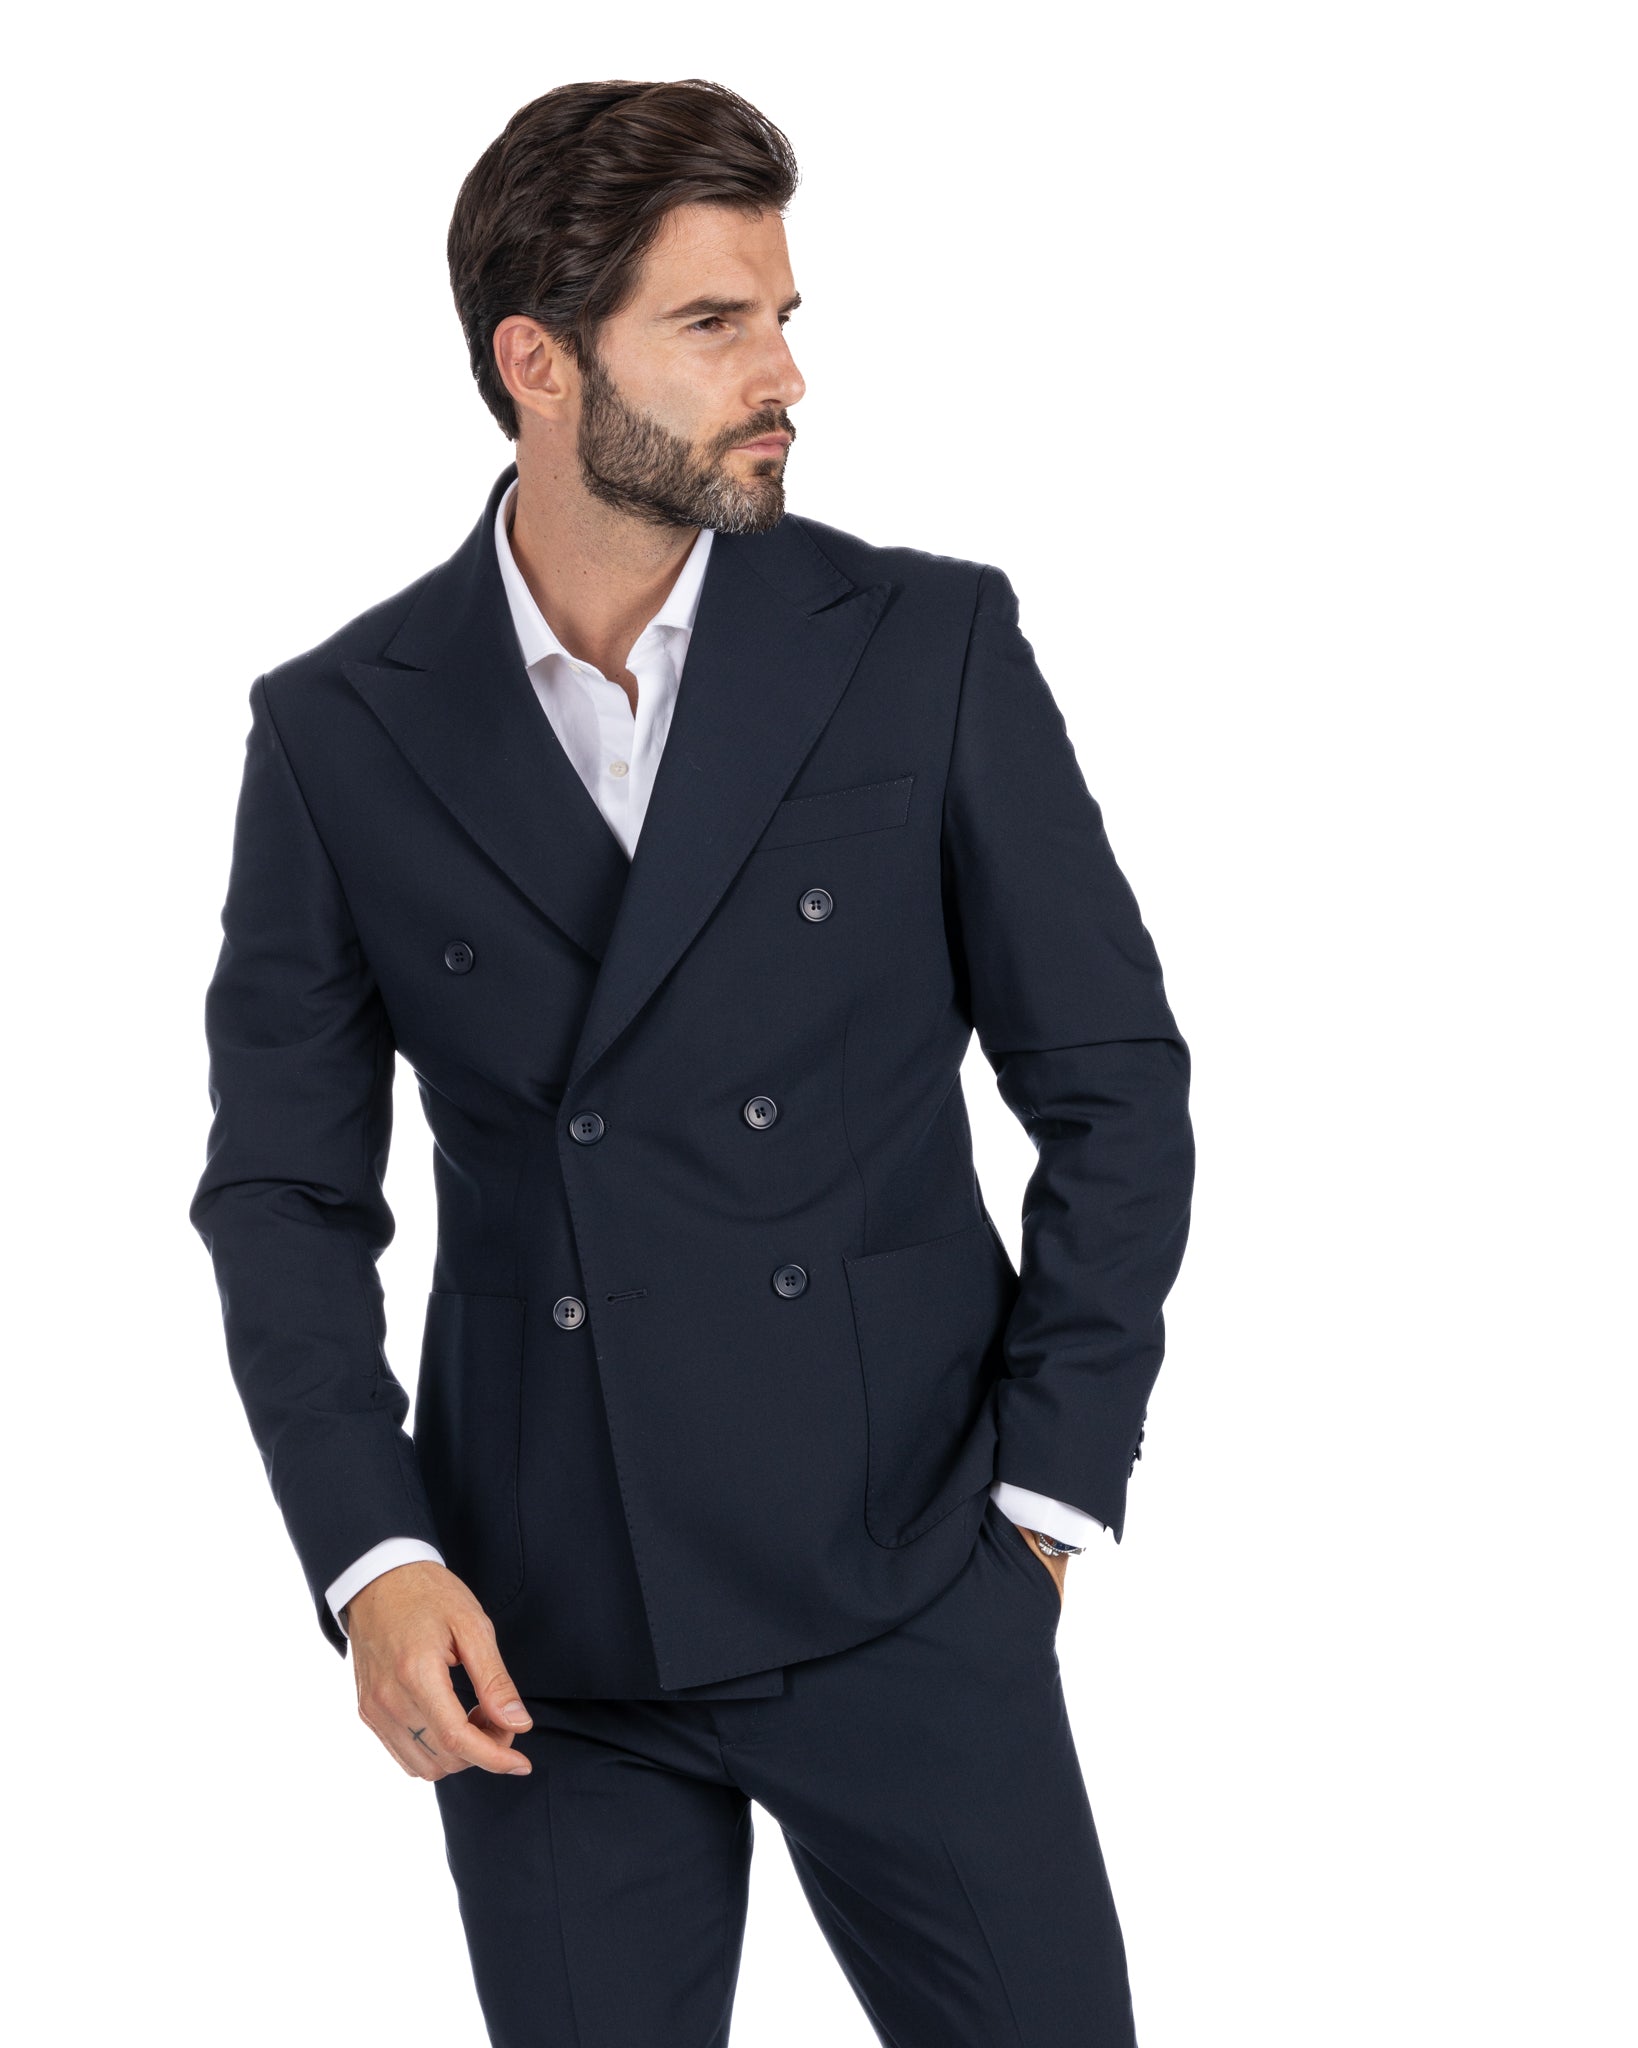 Monaco - dark blue double-breasted suit